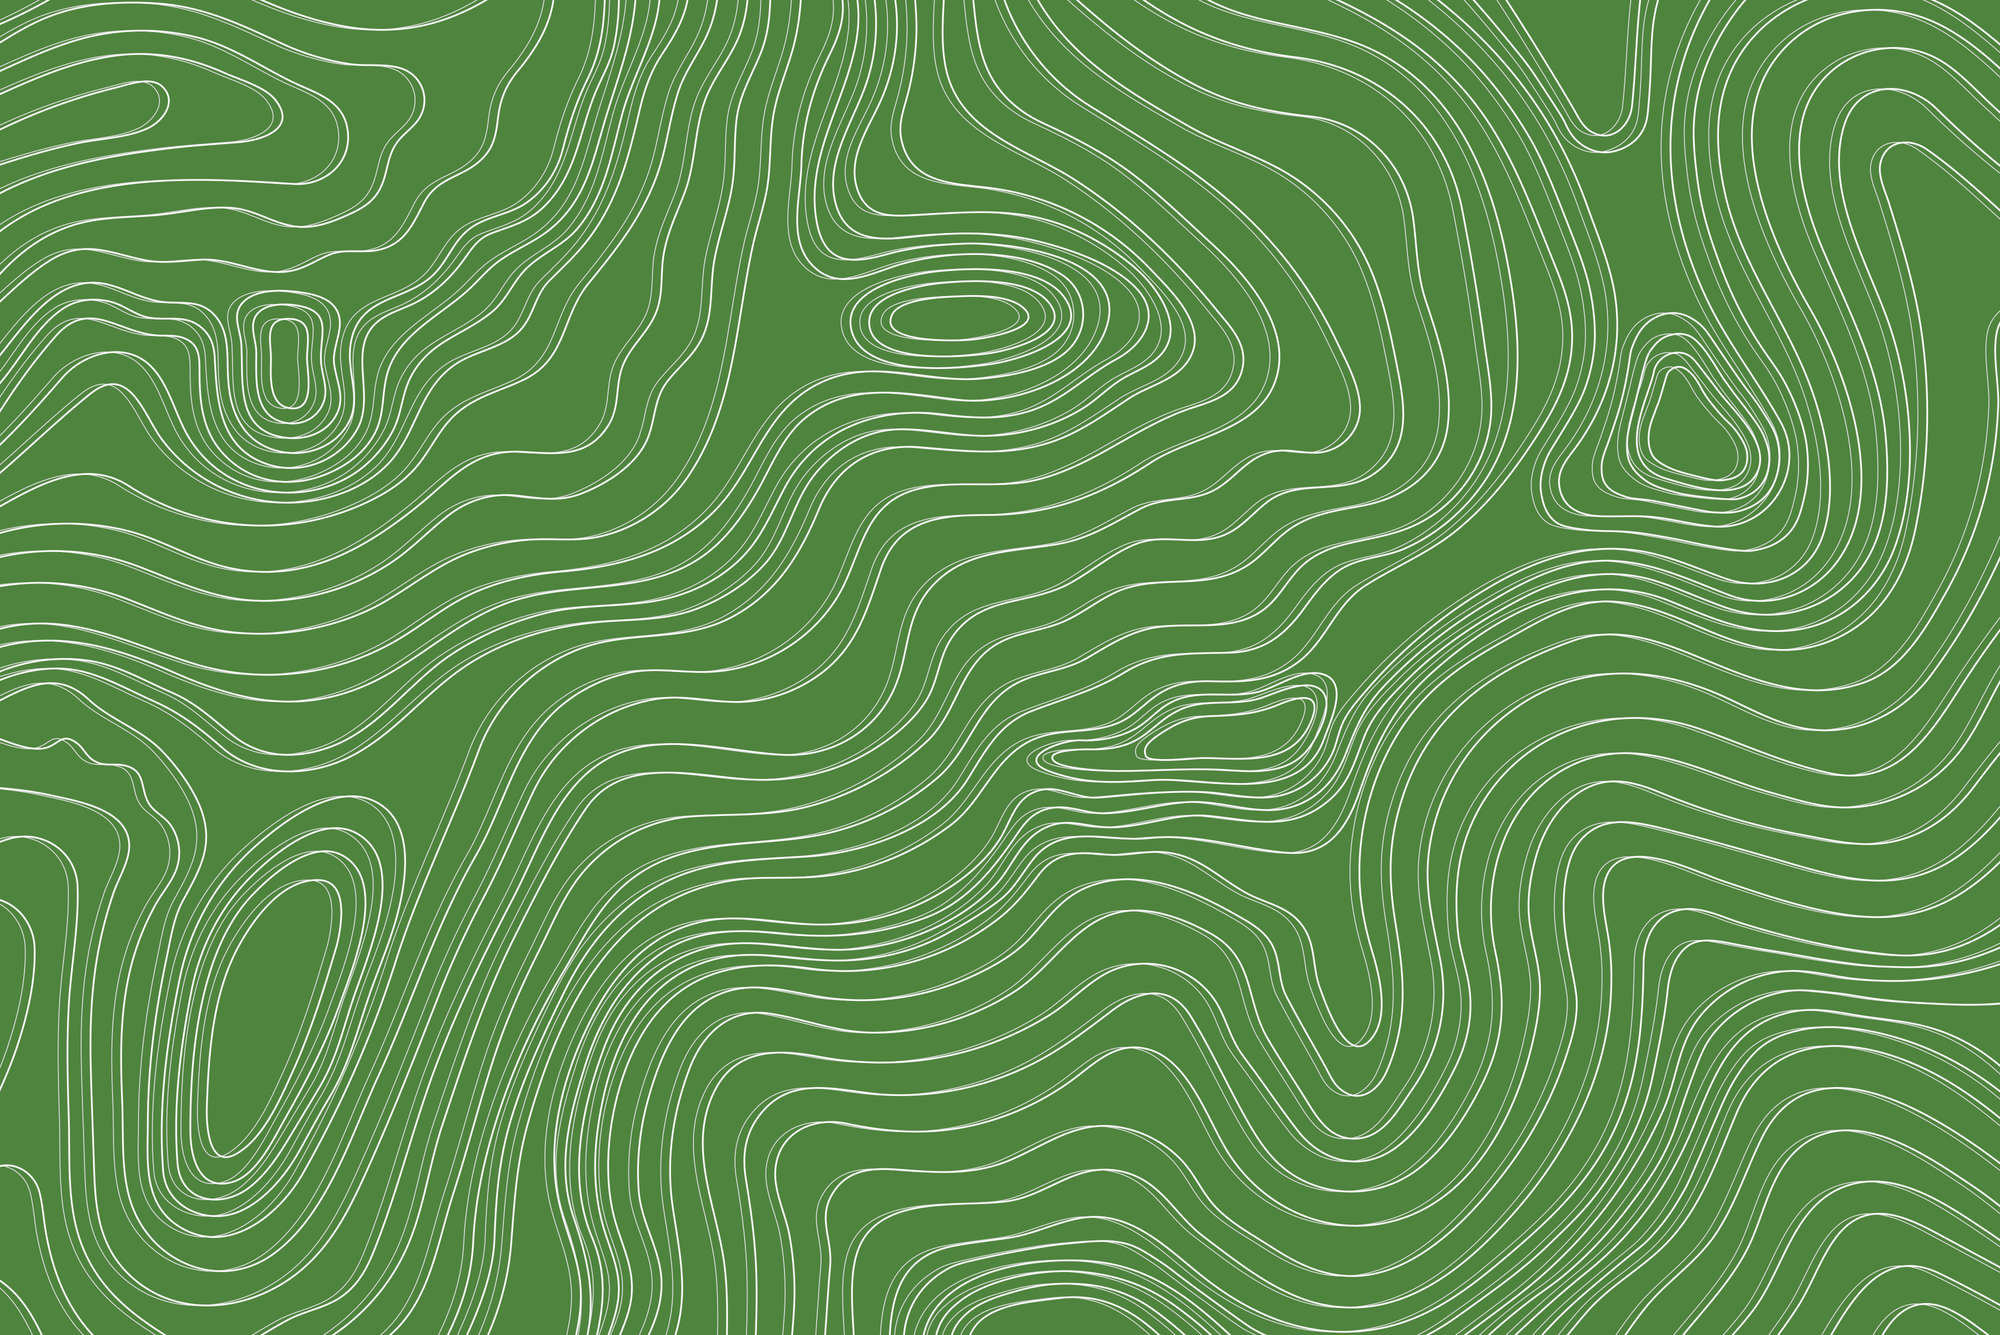             Ontwerpbehang golven en cirkels patroon groen op parelmoer glad vlies
        